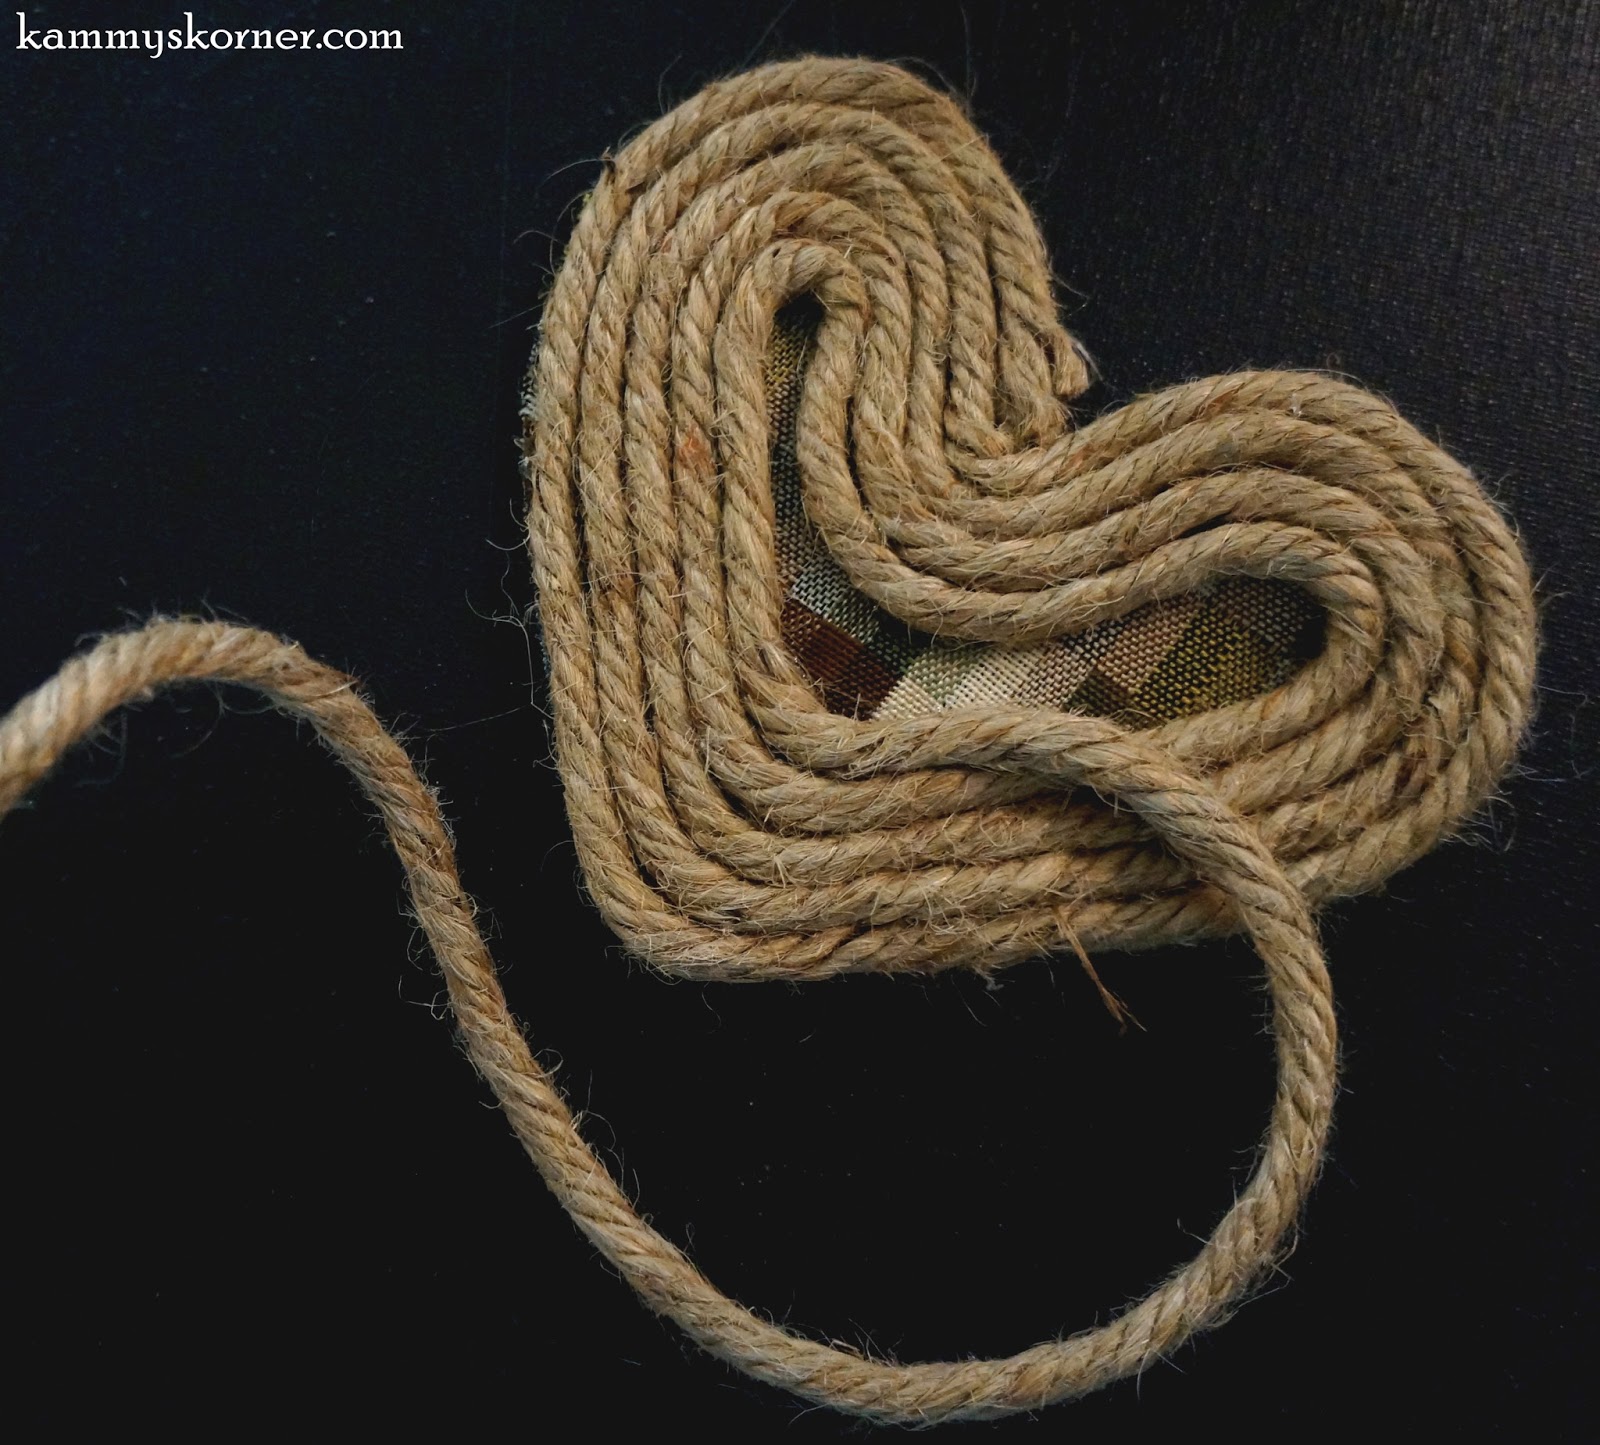 Kammy's Korner: How to Make a Jute Rope Heart Embellishment